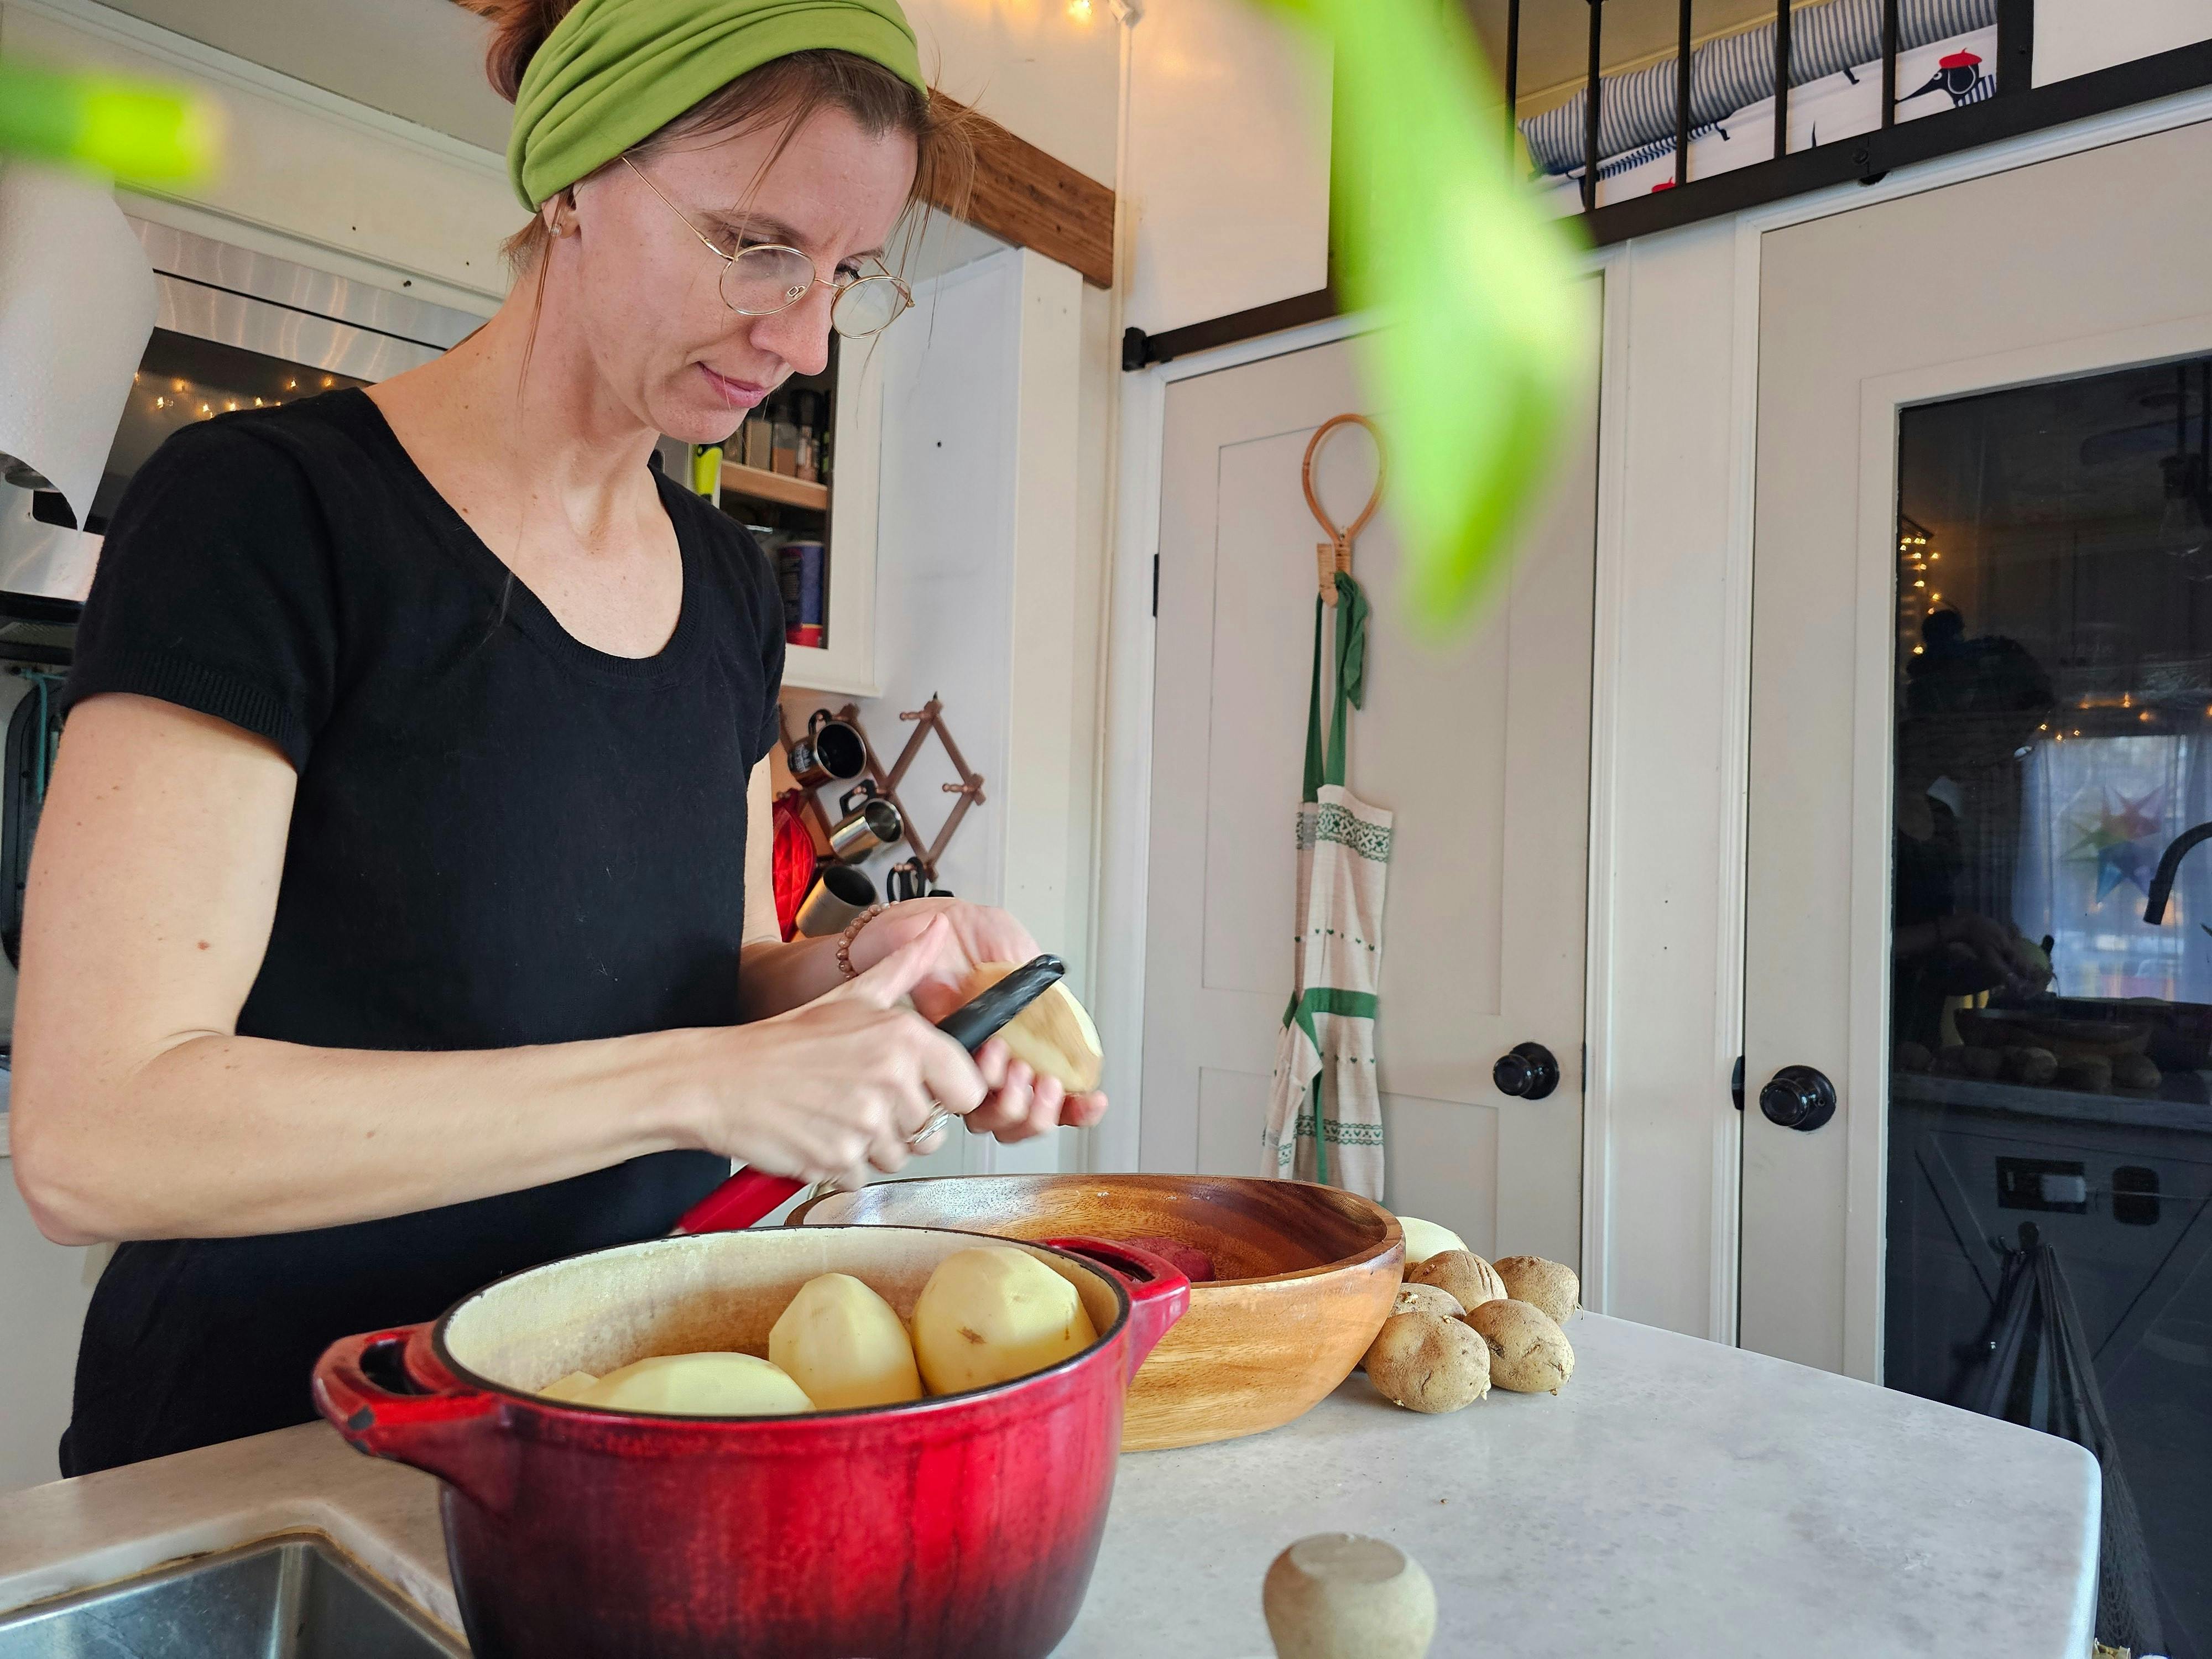 Bibi Barringer prepares potatoes in the kitchen of her KZ Durango fifth wheel.